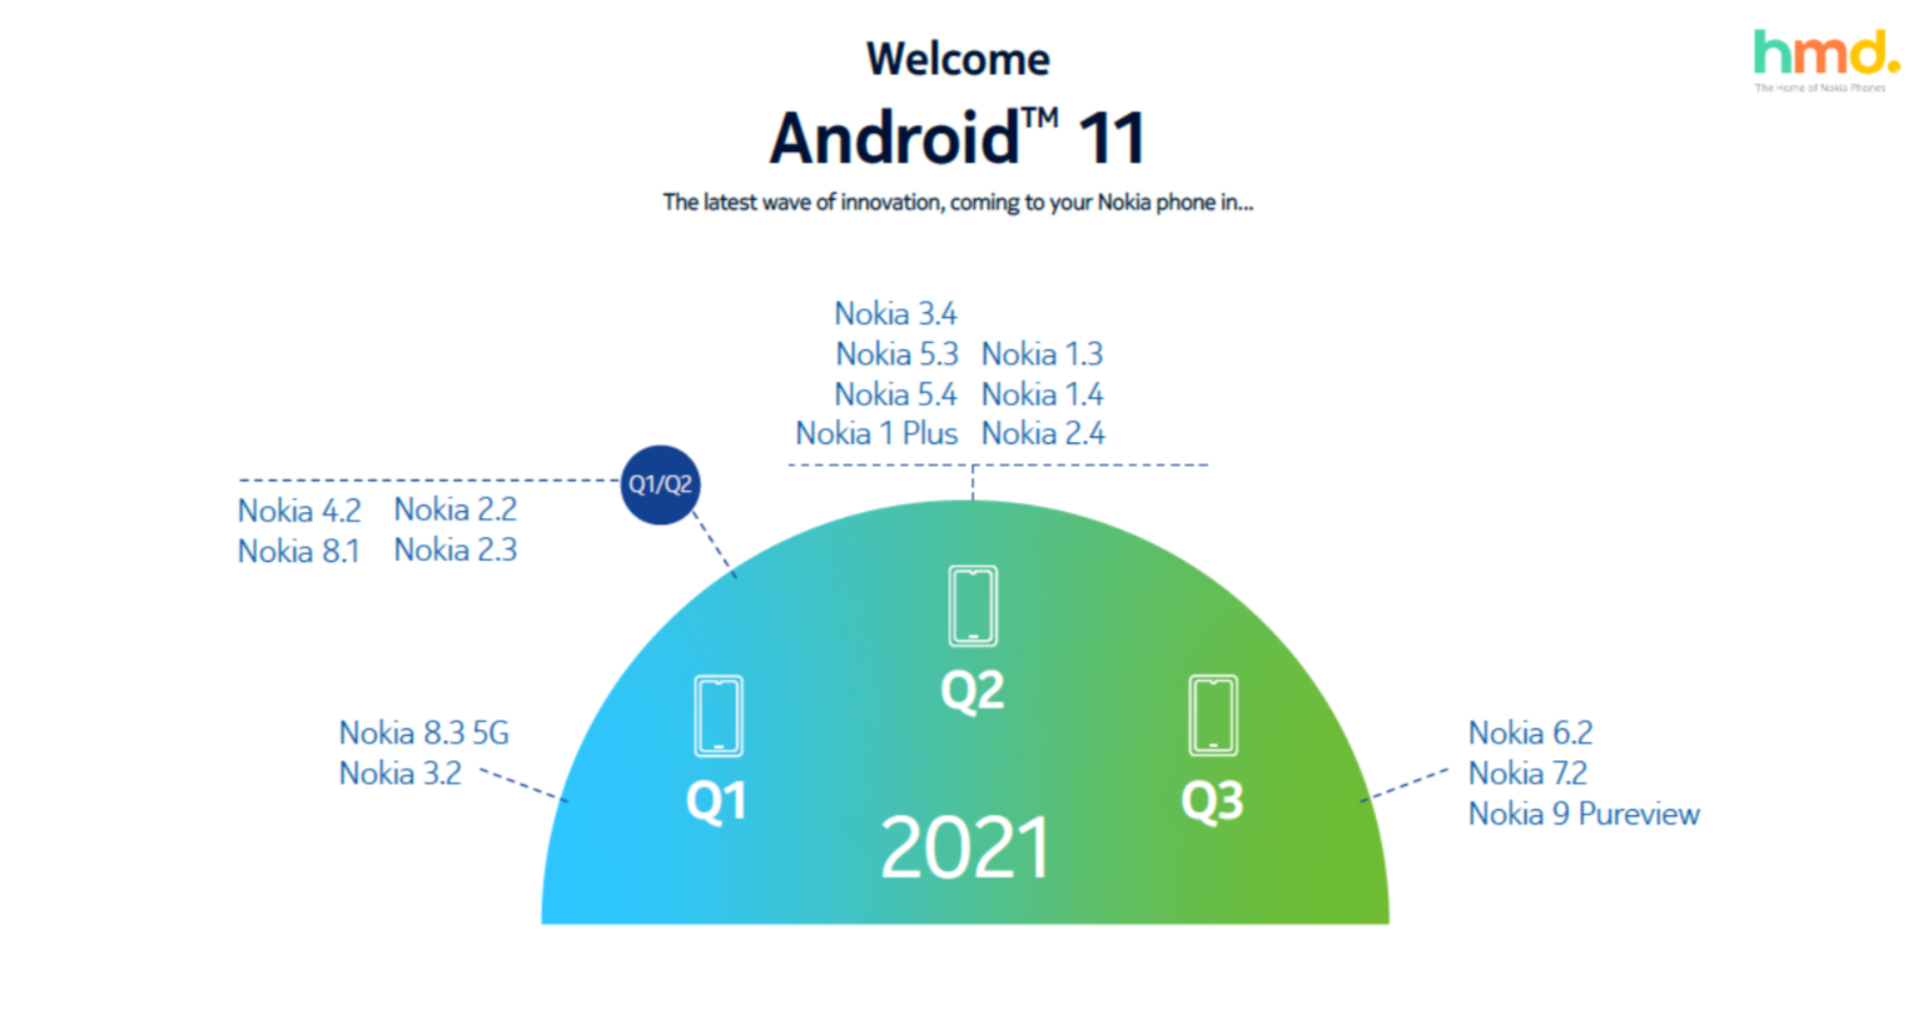 Nokia Android 11 rodmap